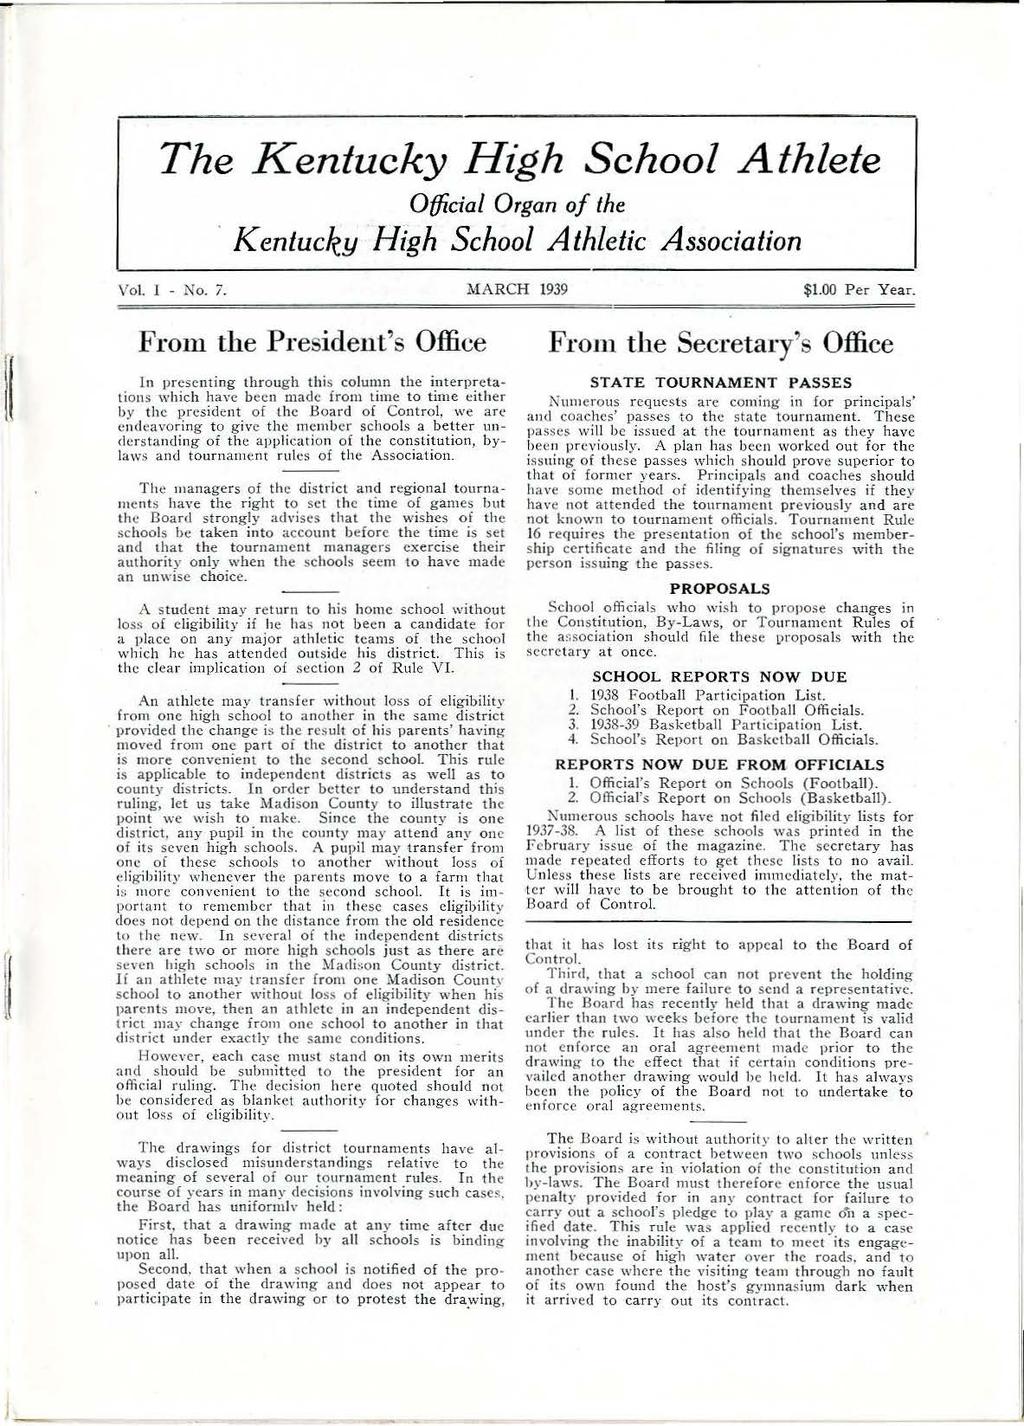 The Kentucky Hgh School Athlete Otfdal Organ of the Kentucky Hgh School Athletc Assocaton Vol. 1 No. 7. MARCH 1939 $1.00 Per Year.